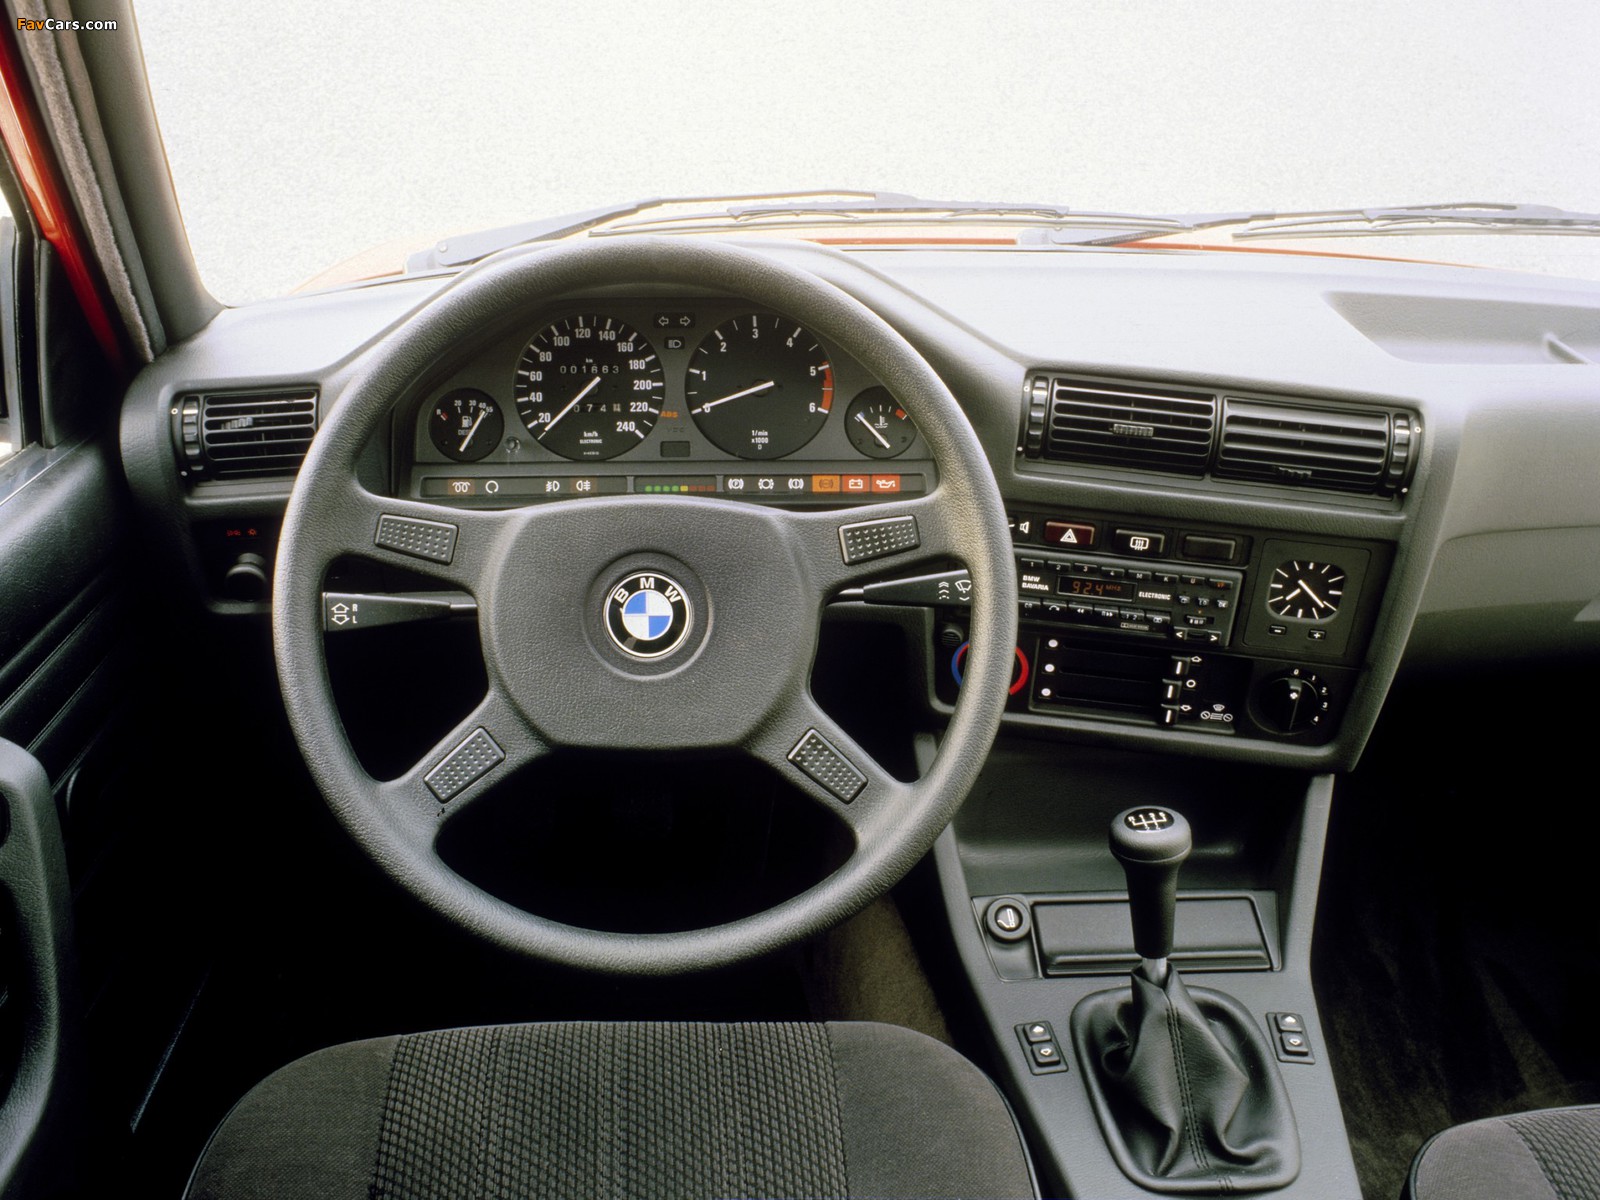 BMW 324d Sedan (E30) 1985–90 wallpapers (1600 x 1200)